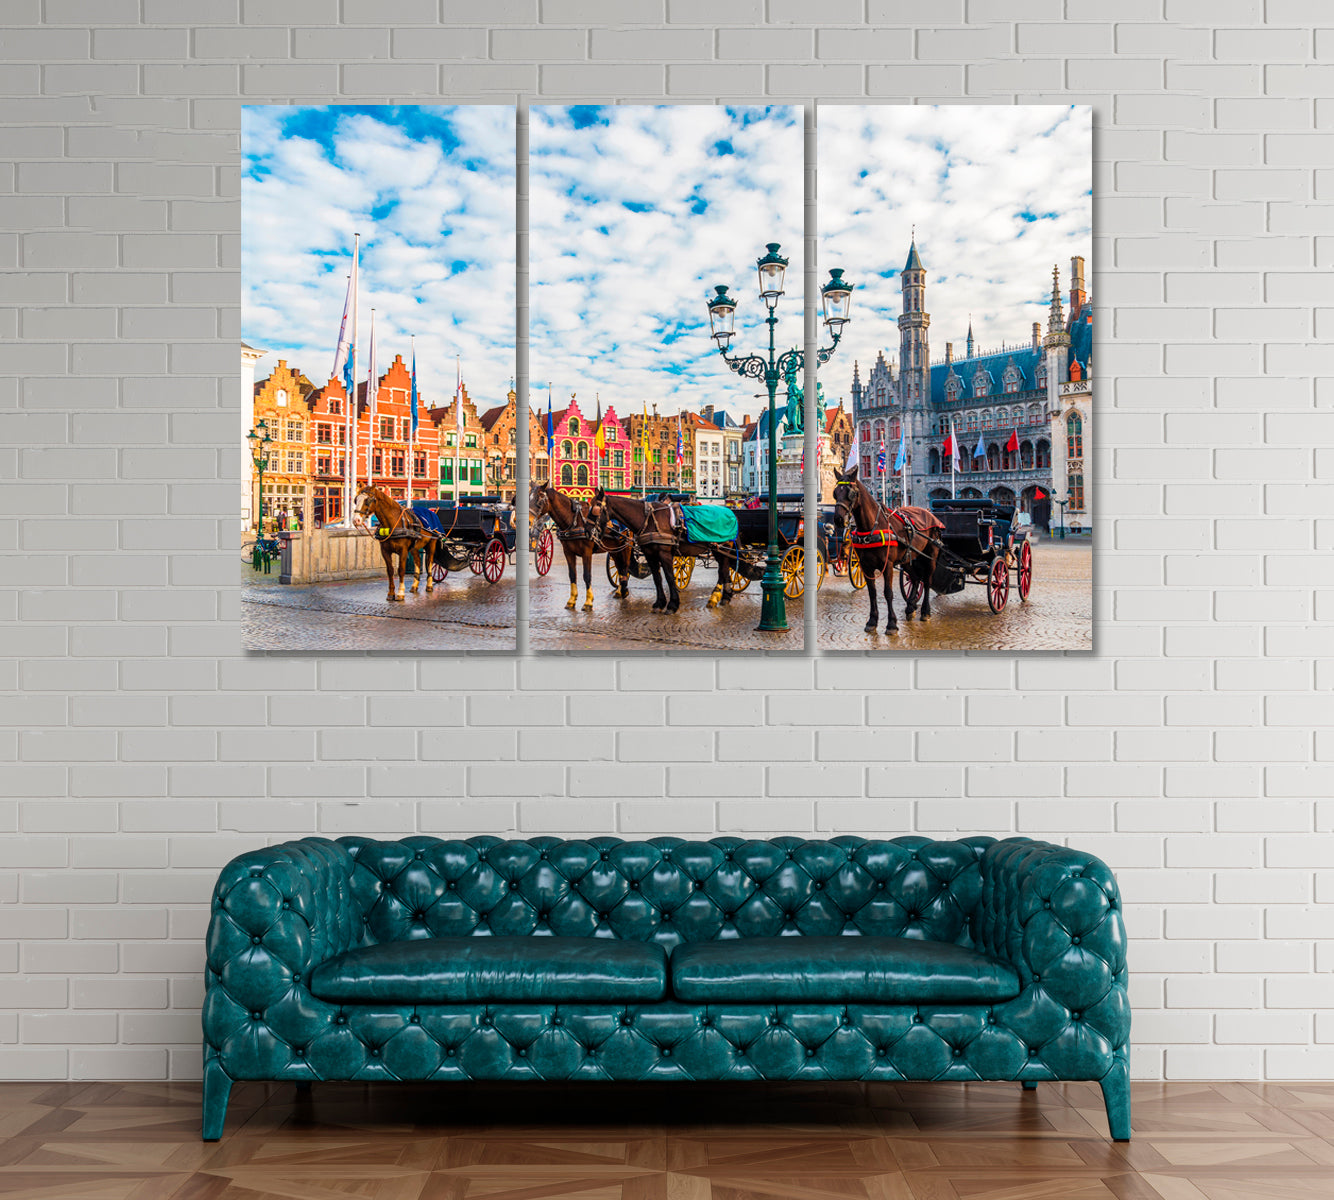 Market Square Bruges Belgium Canvas Print ArtLexy 3 Panels 36"x24" inches 